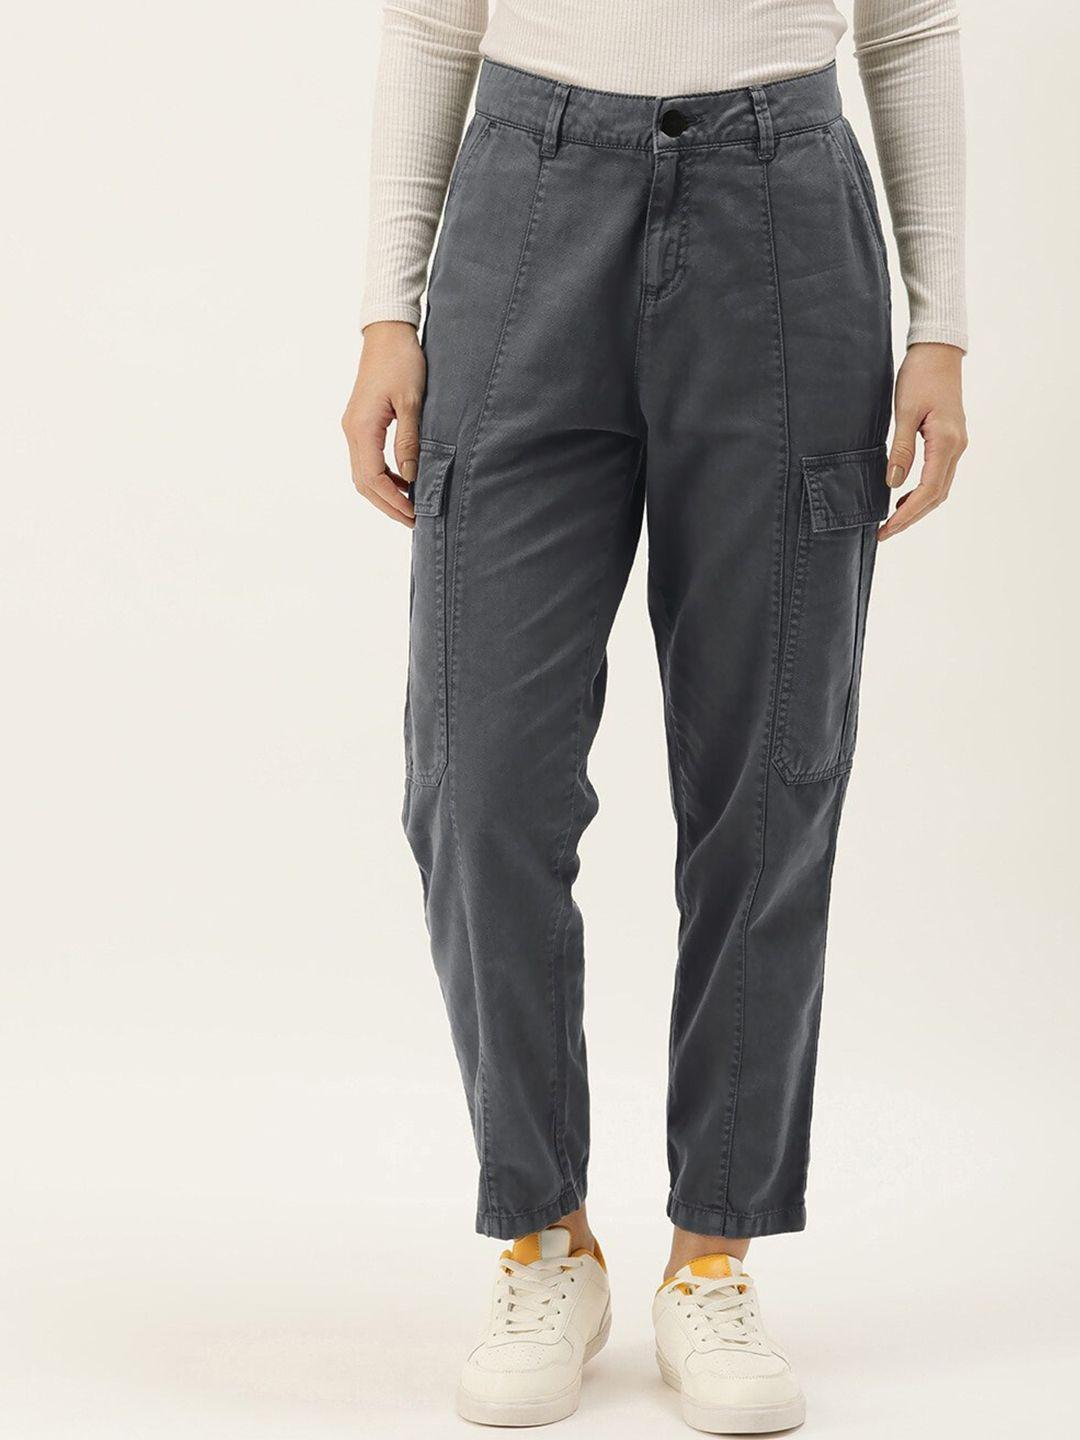 ivoc-women-grey-cargos-trousers